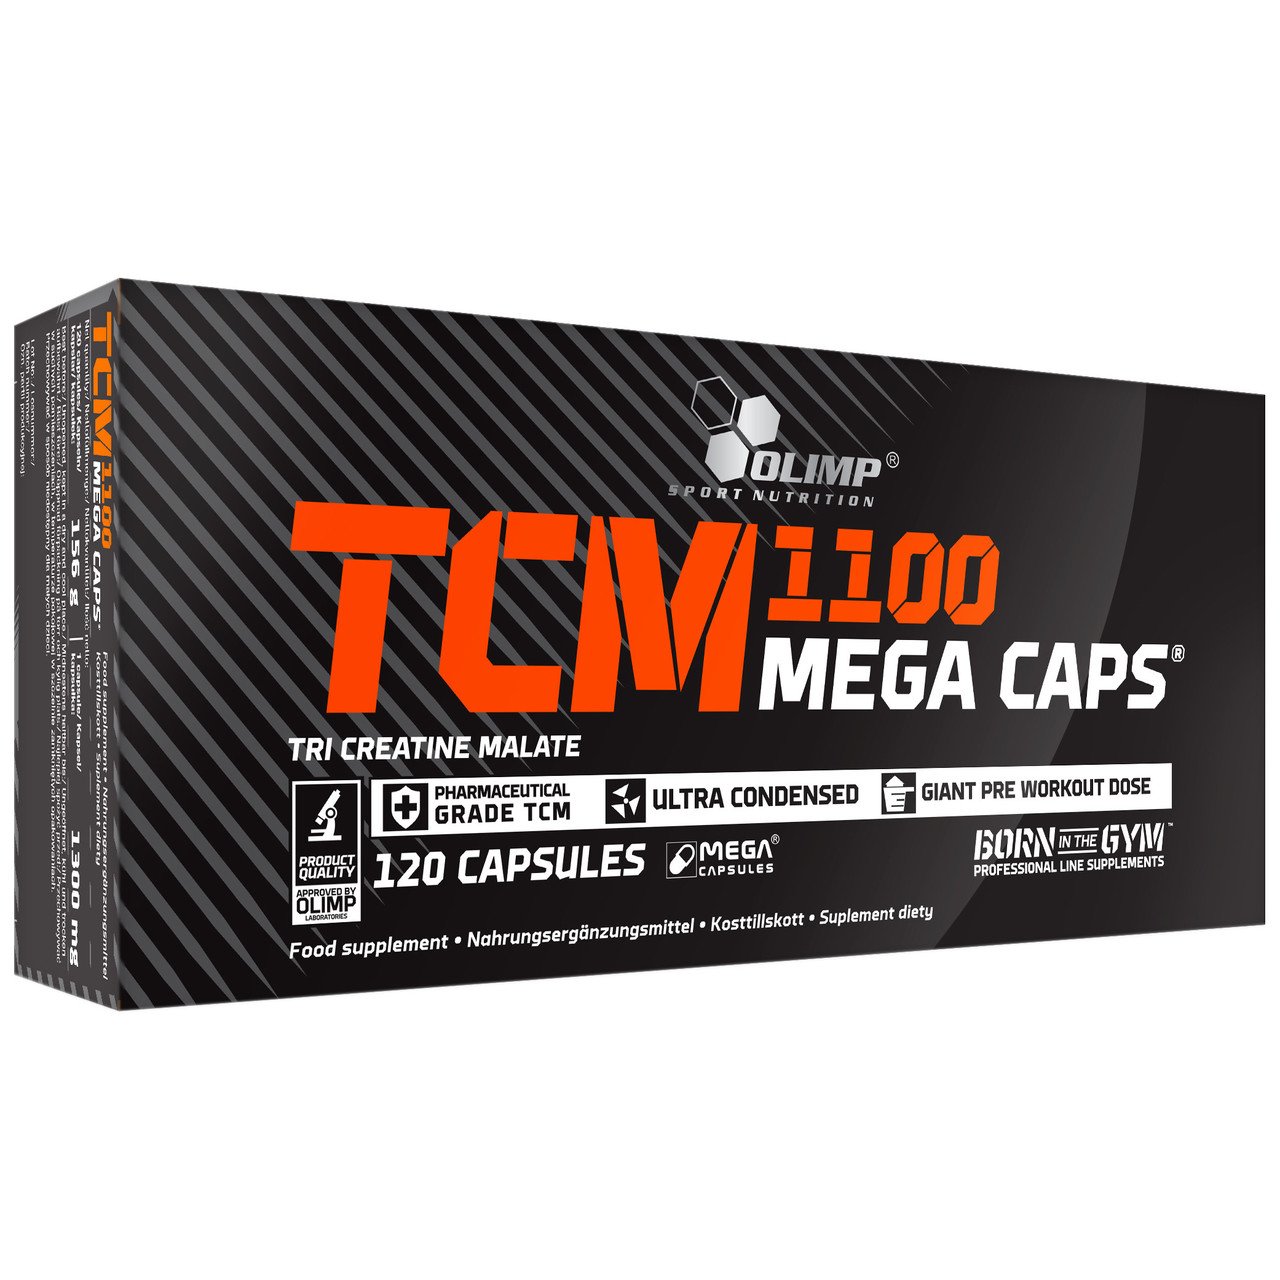 Креатин Olimp Labs TCM Mega Caps 1100 120 caps,  ml, Olimp Labs. Сreatine. Mass Gain Energy & Endurance Strength enhancement 